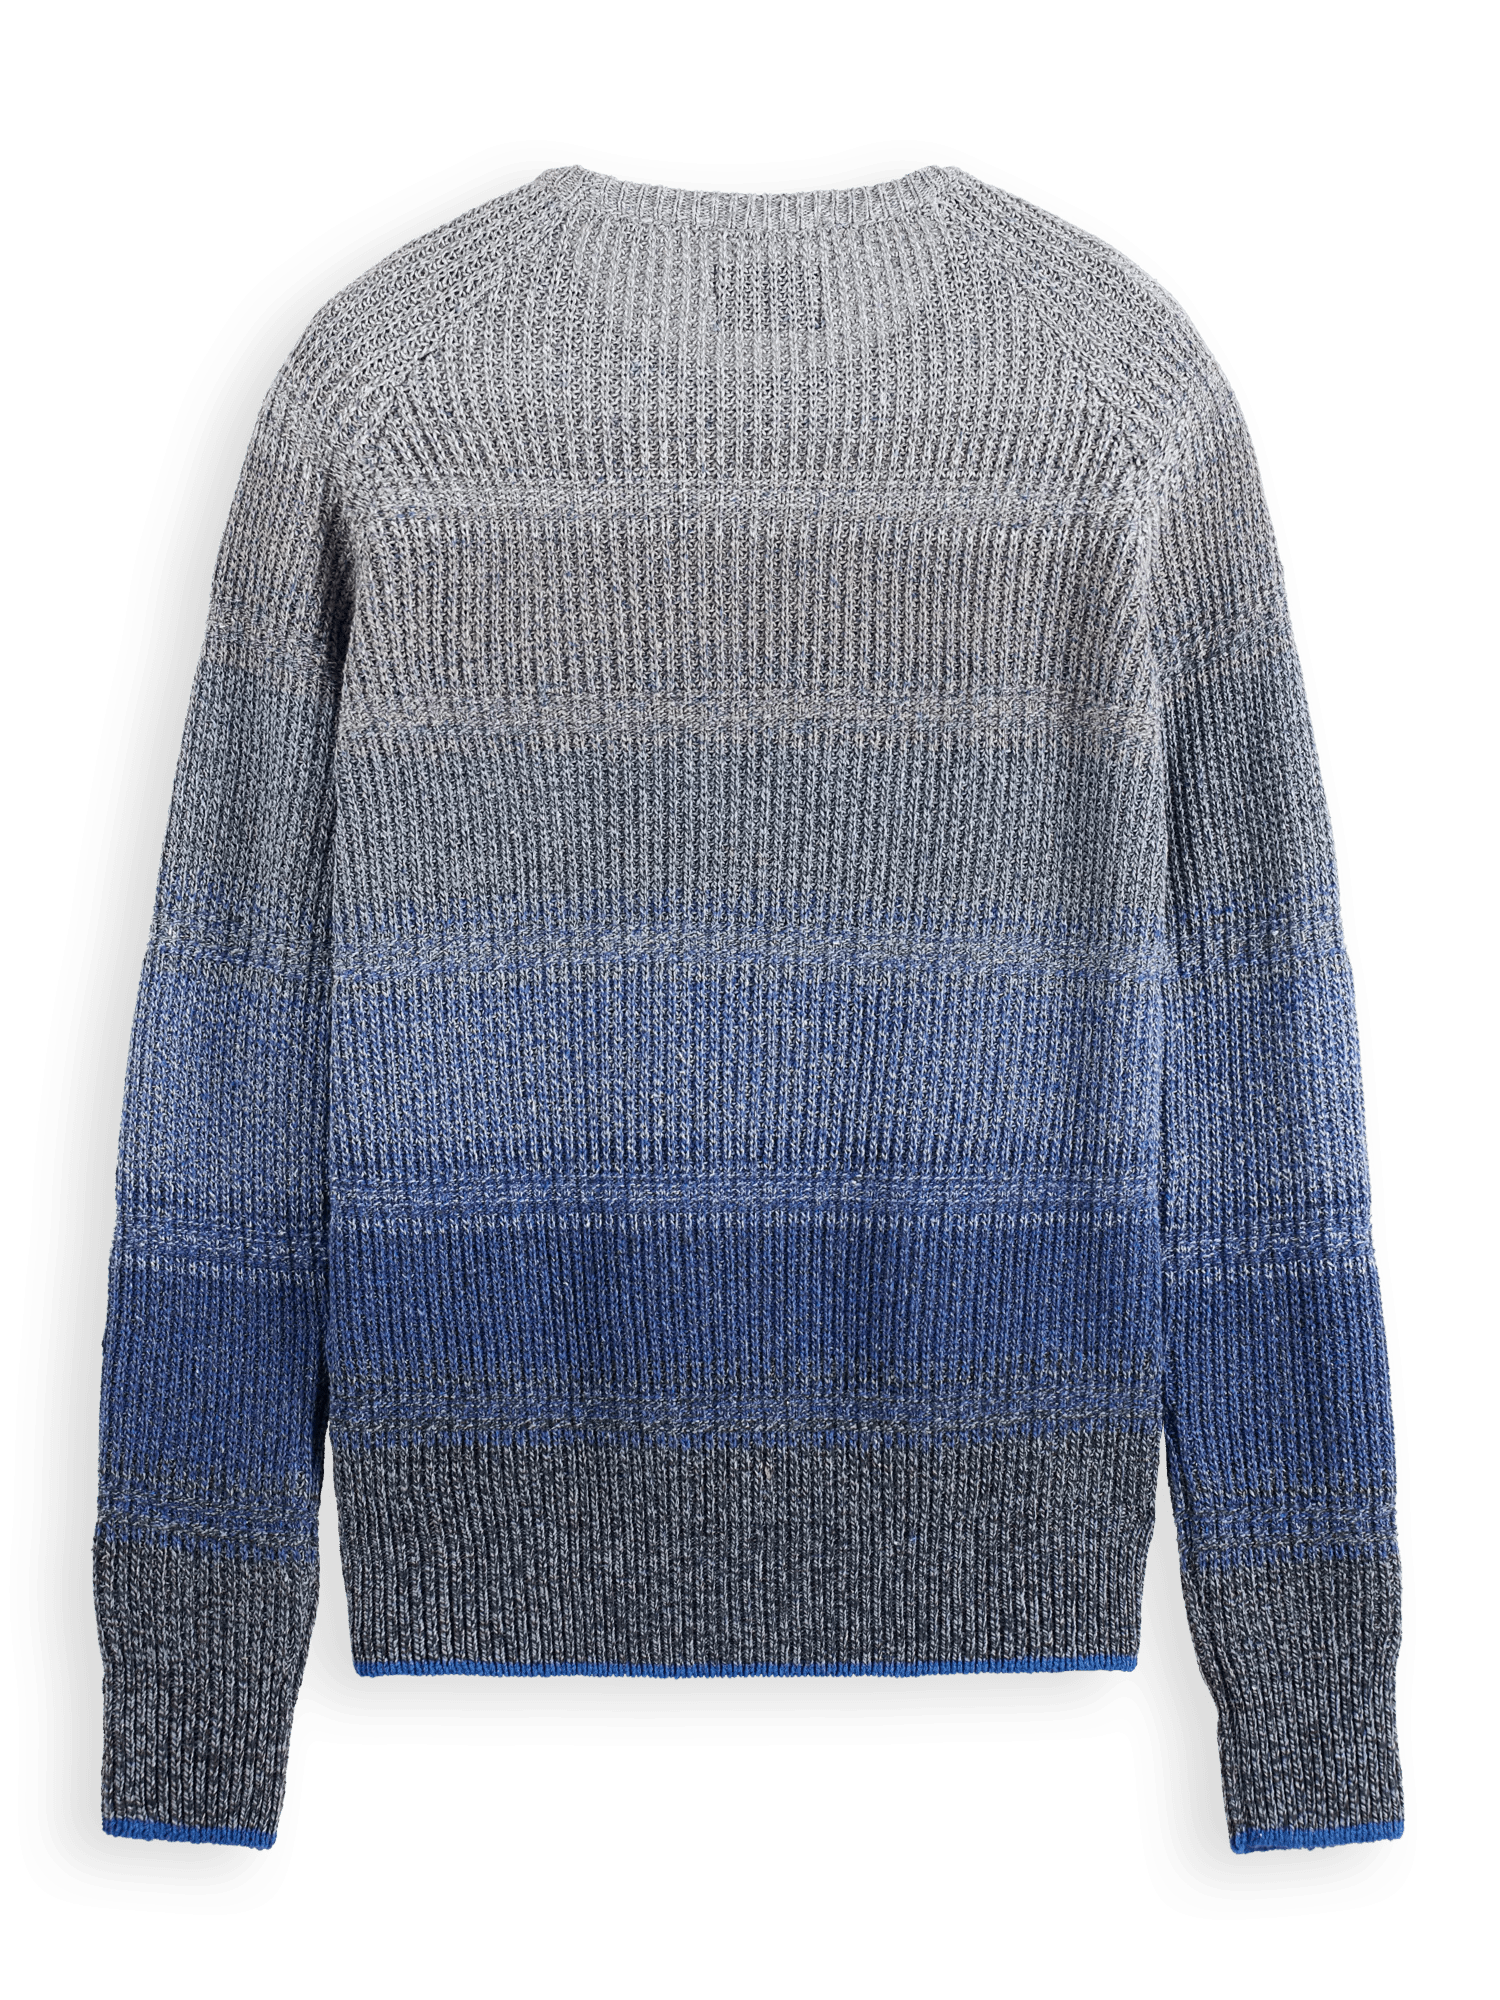 Scotch & Soda Eternal Blauw degrade knit in recycled denim BCK